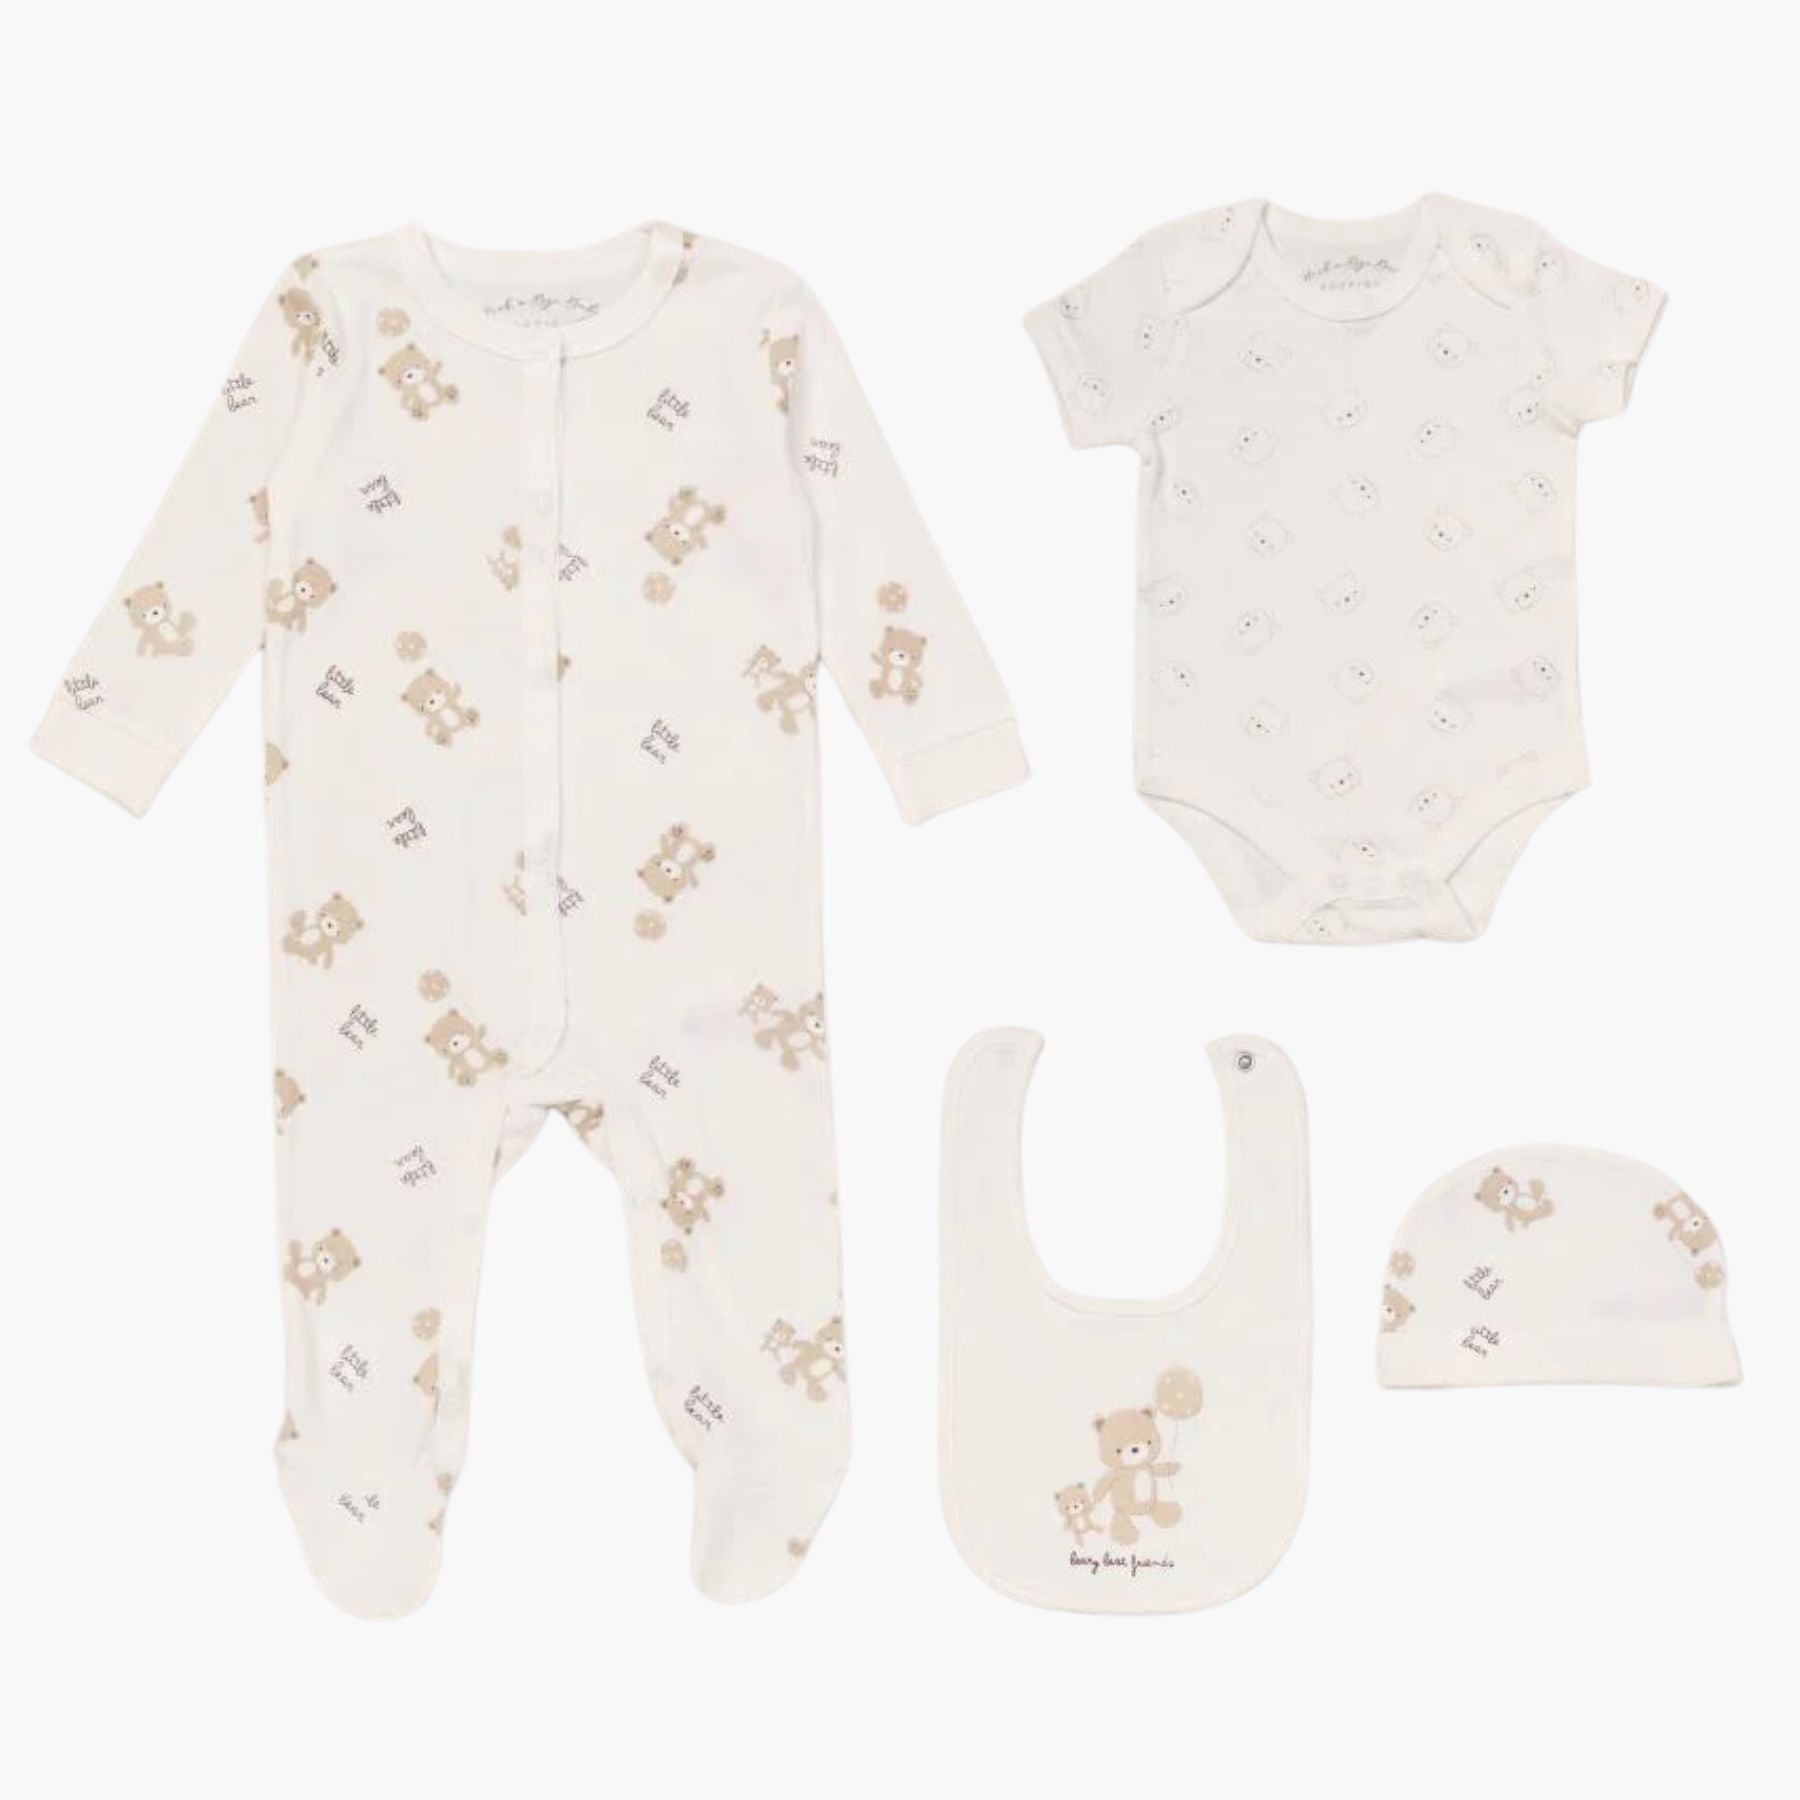 Unisex Baby Clothing Set 'Teddy Bears'